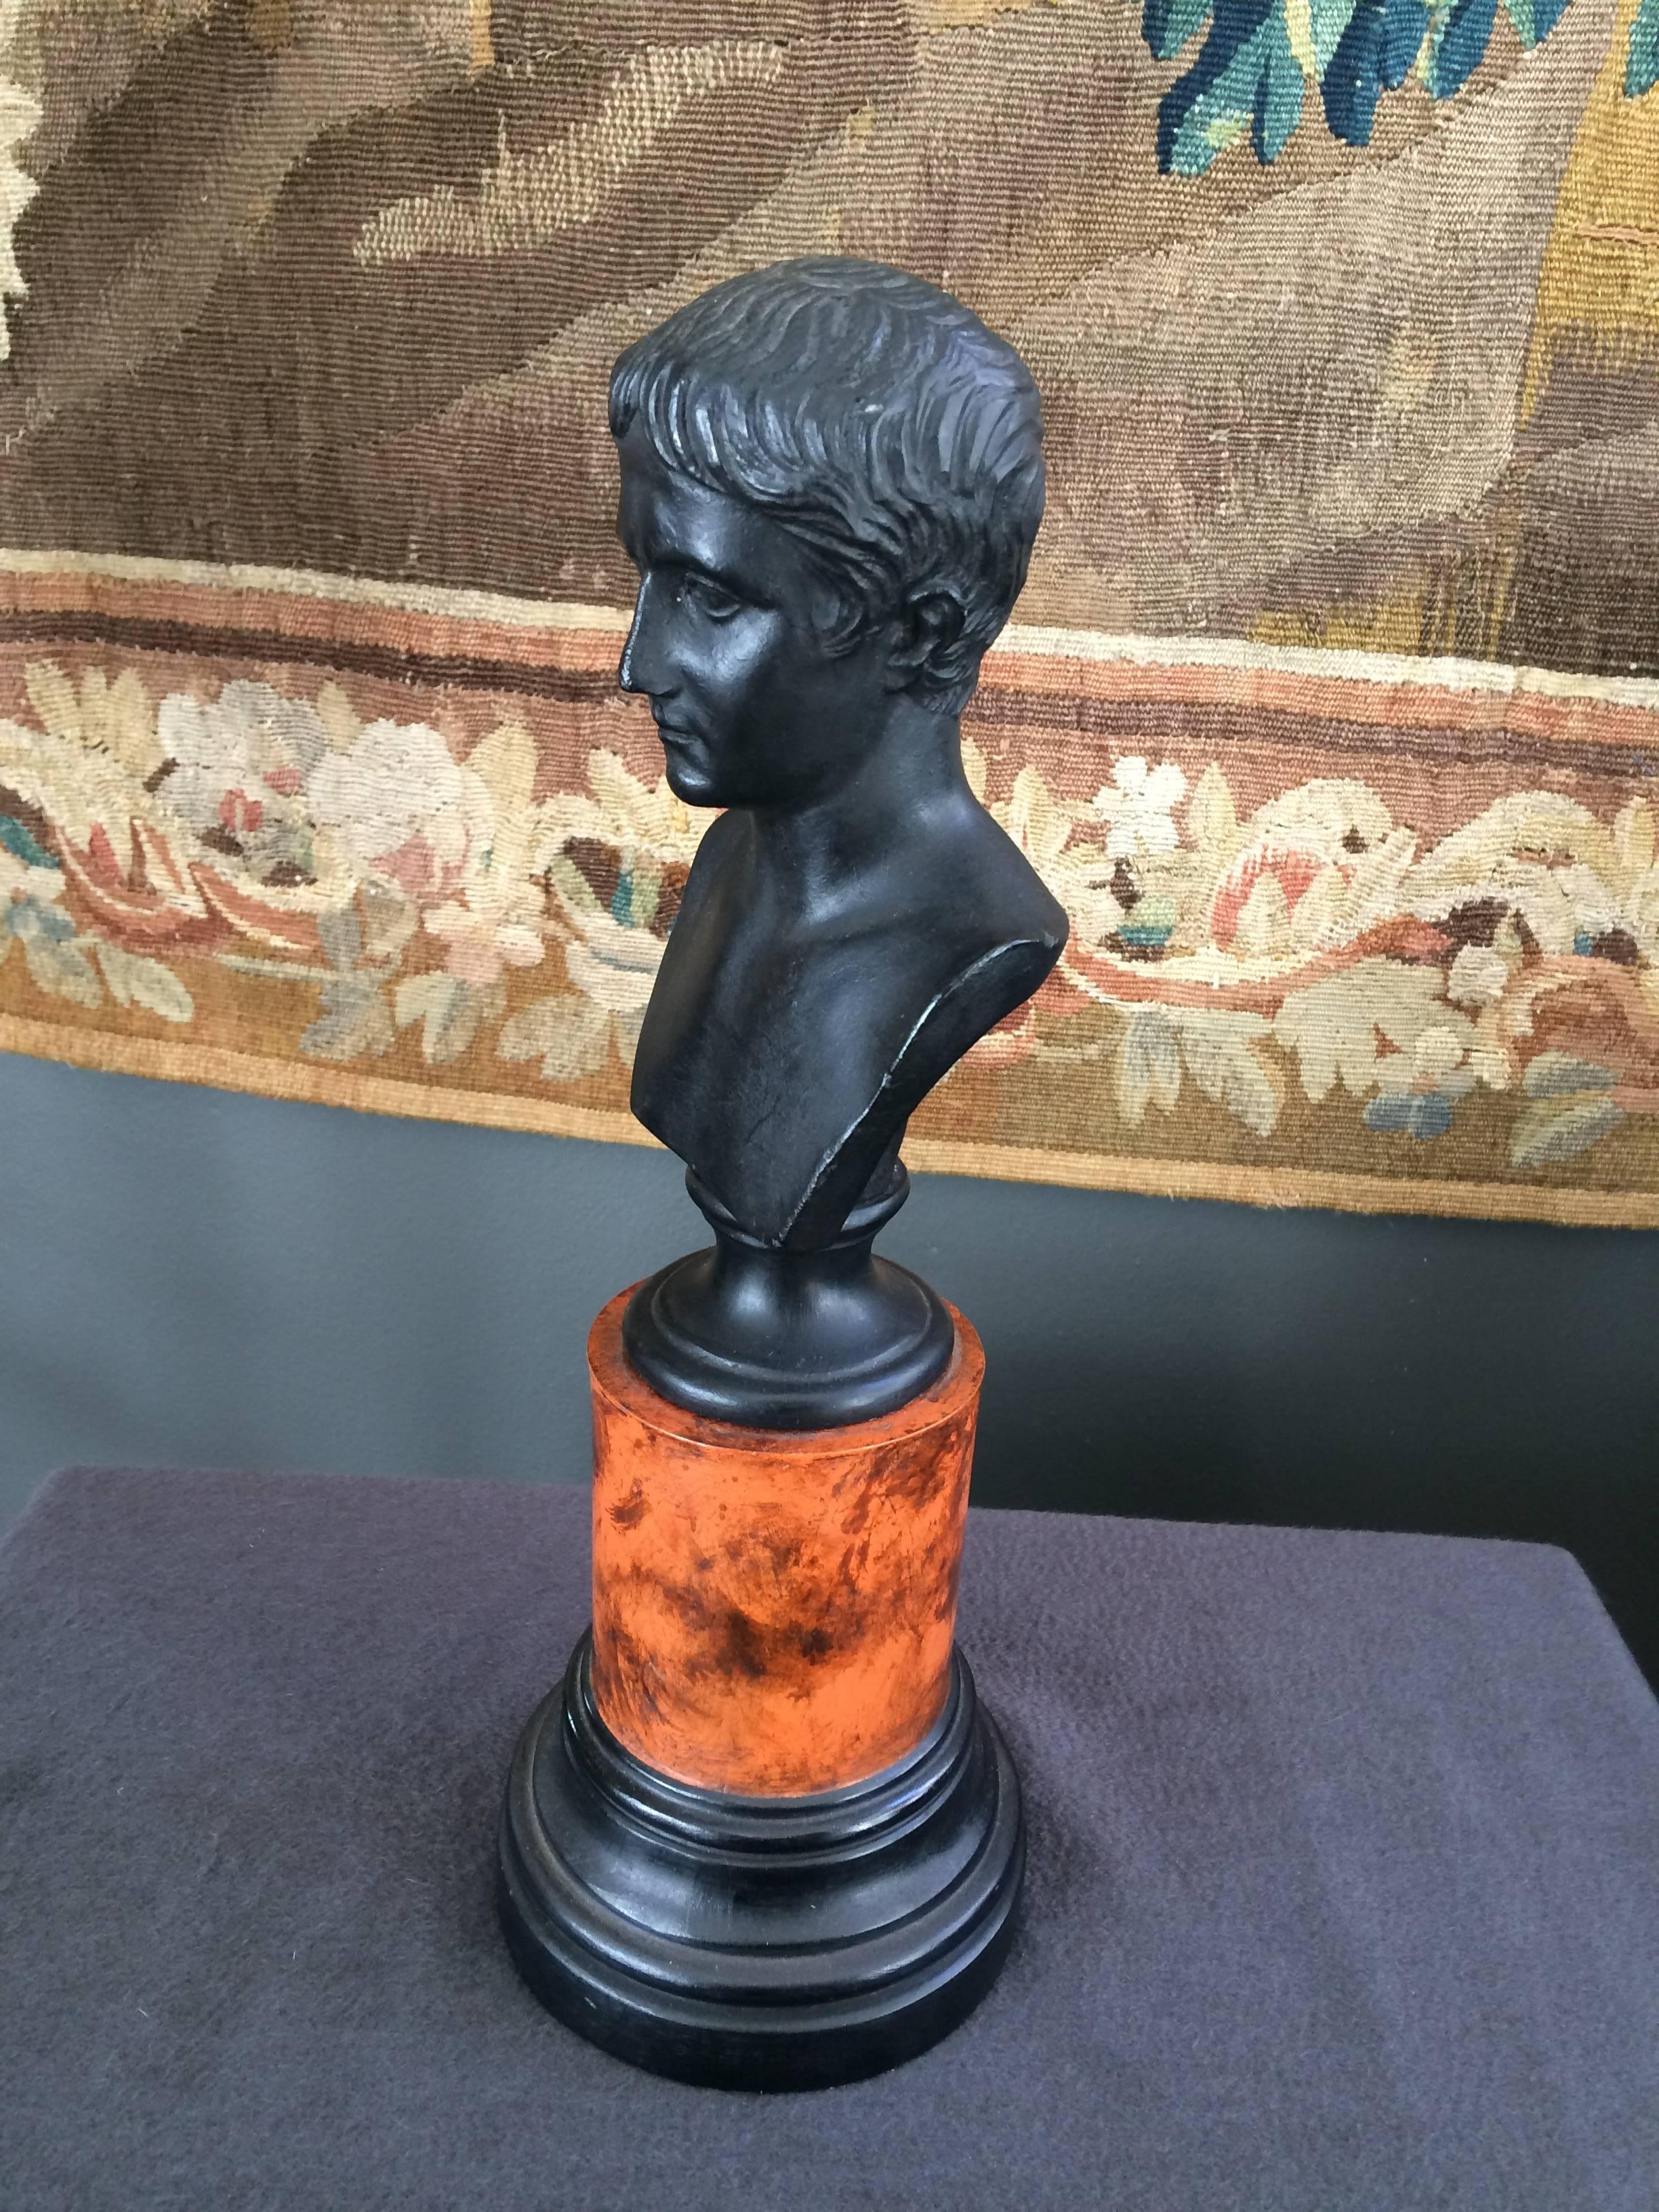 A handsome bust of Augustus Caesar.